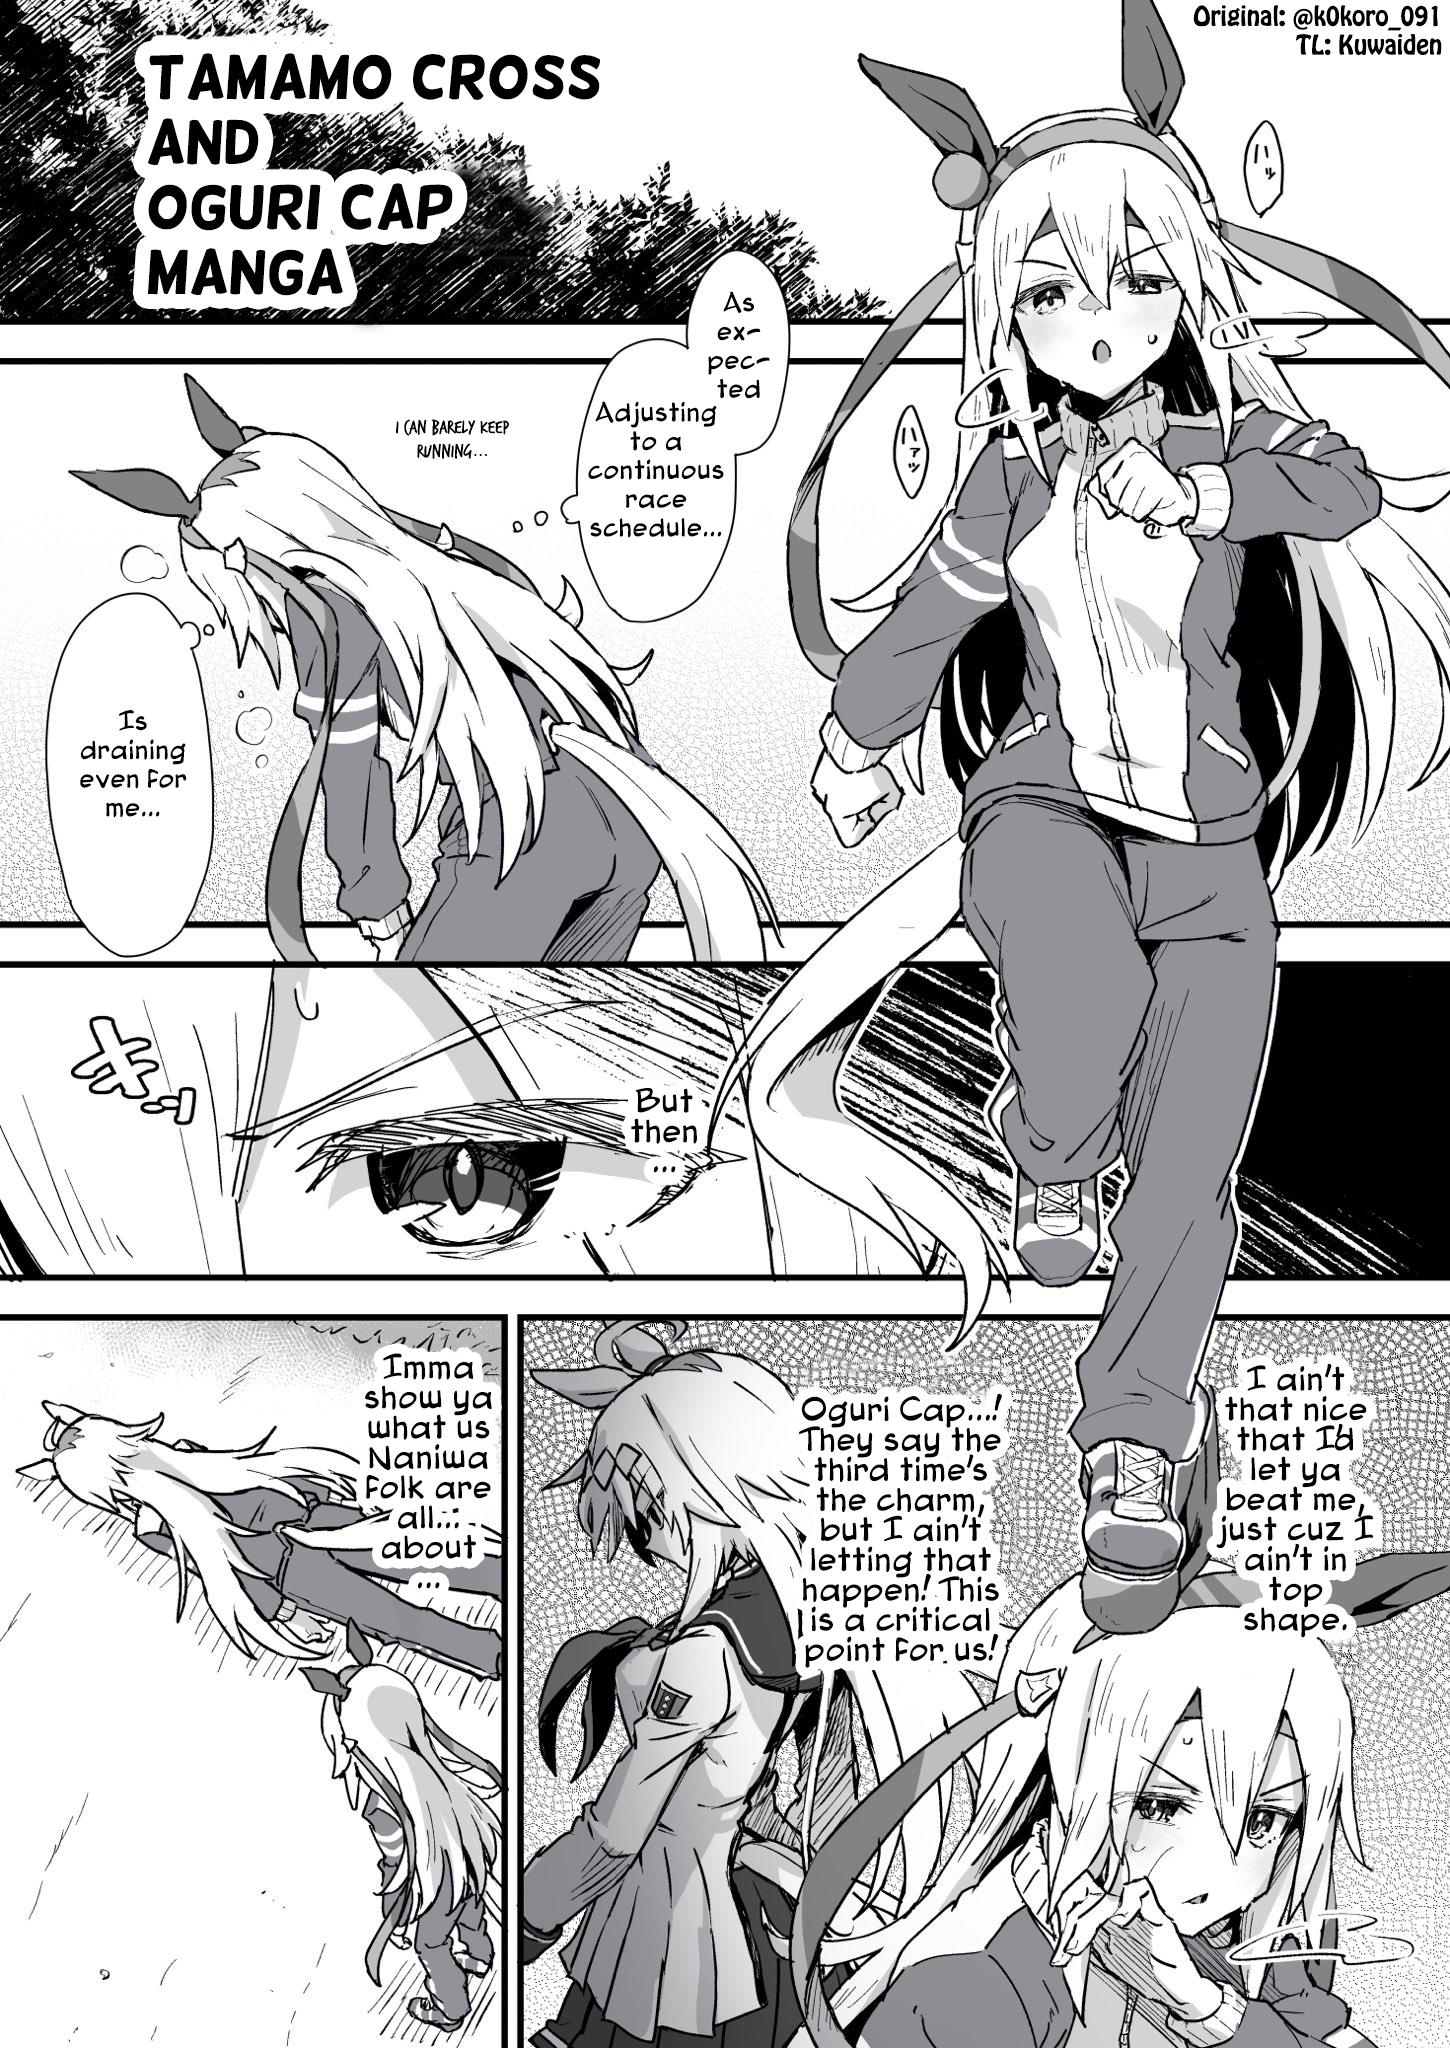 Kokoro-Sensei's Umamusume Shorts (Doujinshi) Chapter 34: Oguri, Whom Tama-Chan Loves, Desperately Needs Her - Picture 1